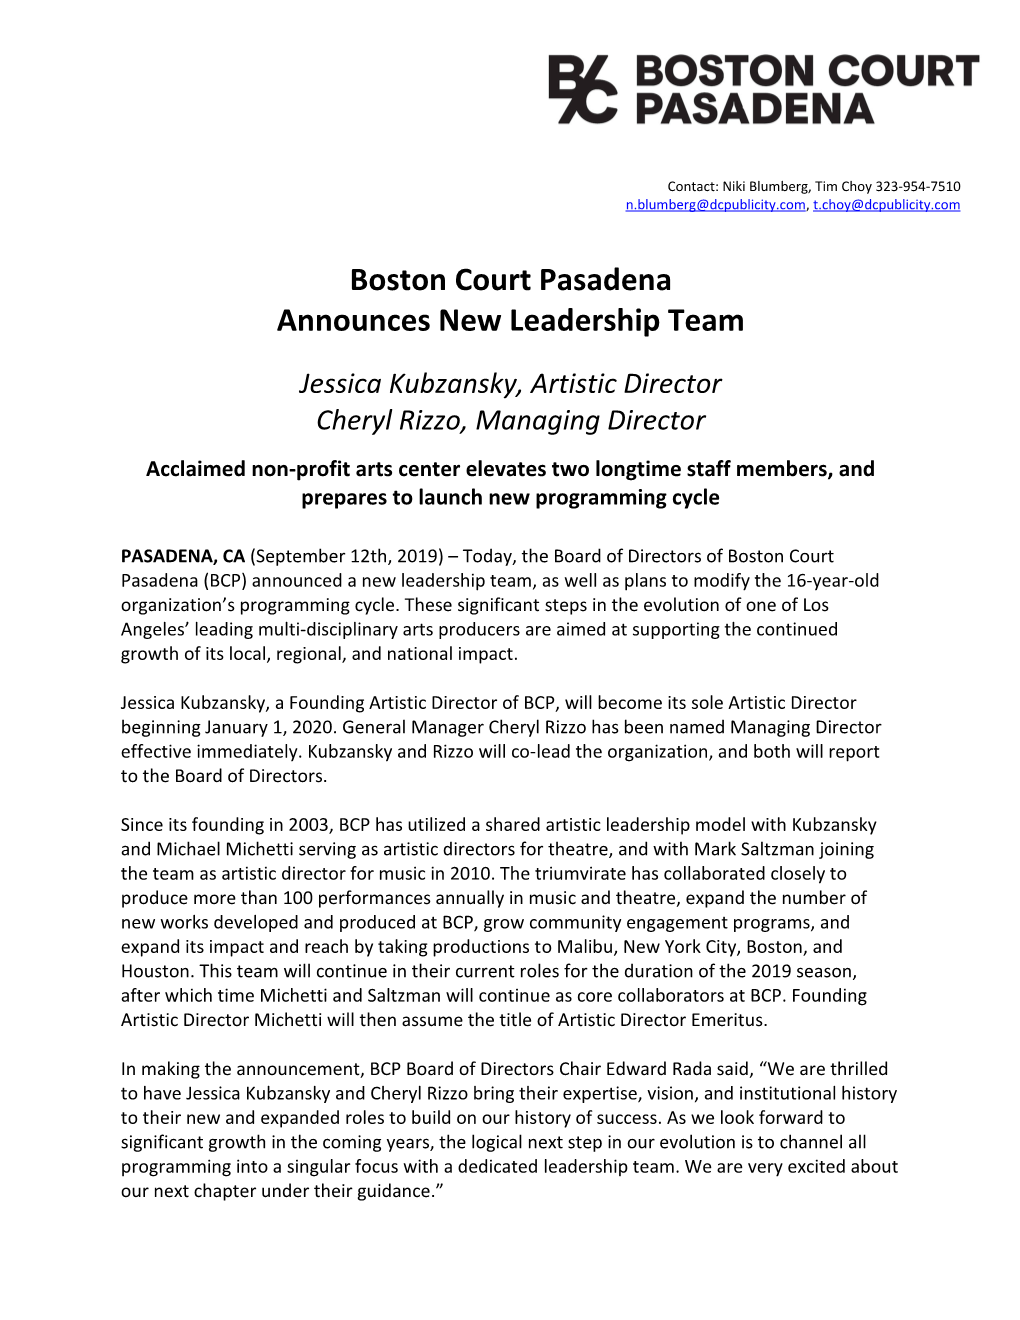 Boston Court Pasadena Announces New Leadership Team